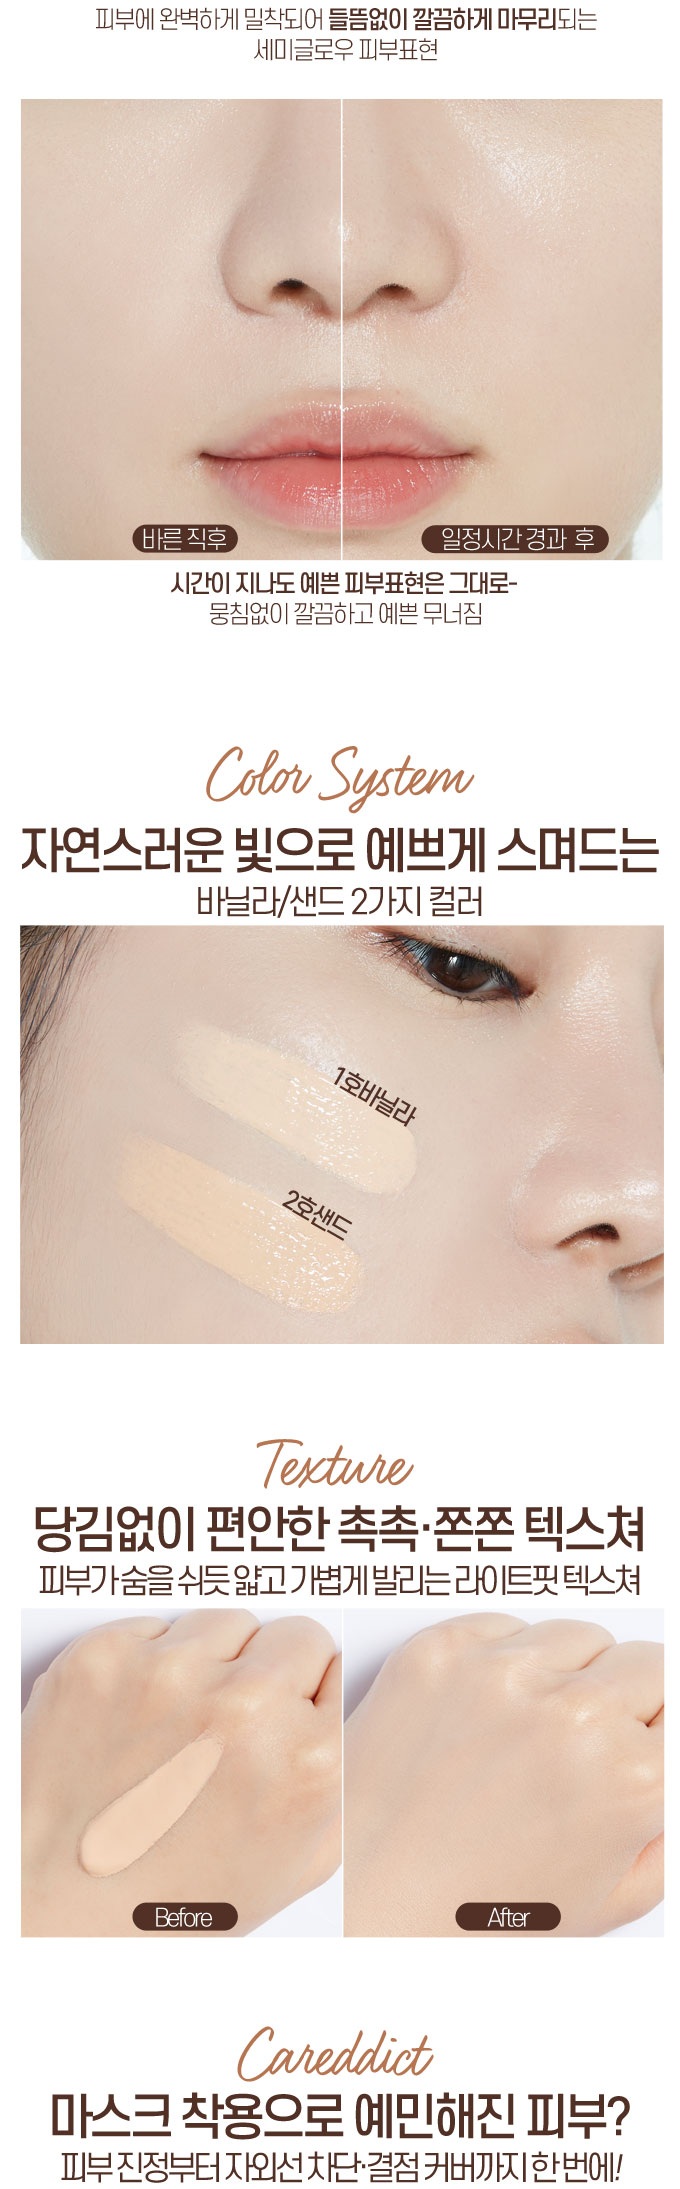 Etude House Careddict All in One Base korean skincare product online shop malaysia China taiwan3